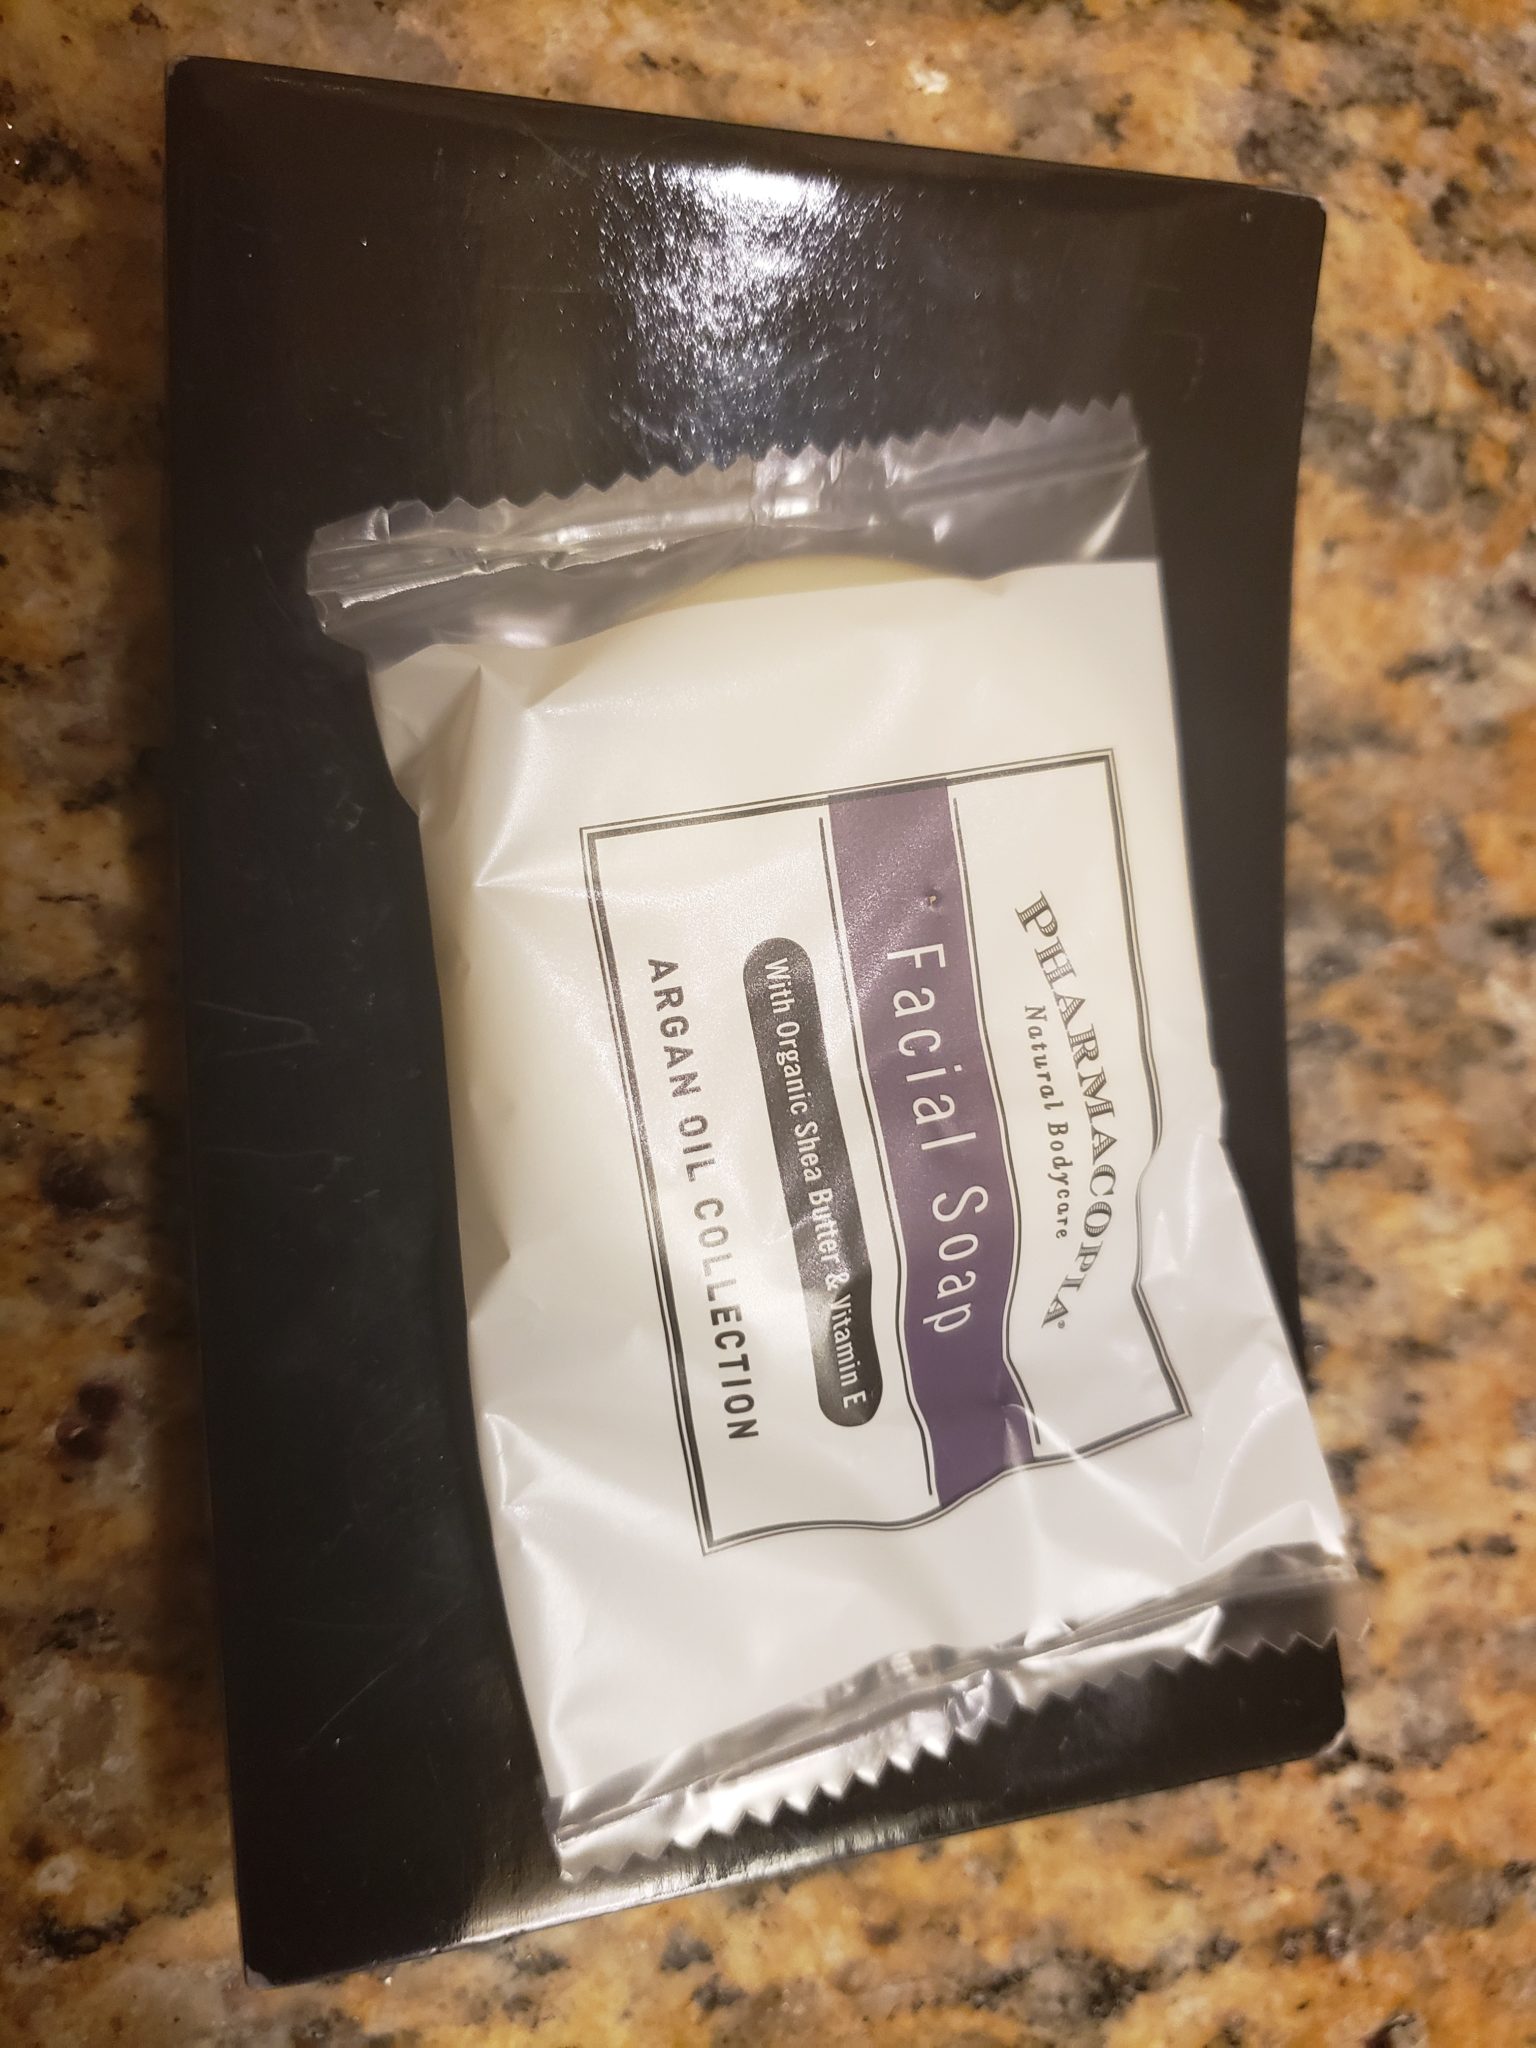 a white soap in a plastic bag